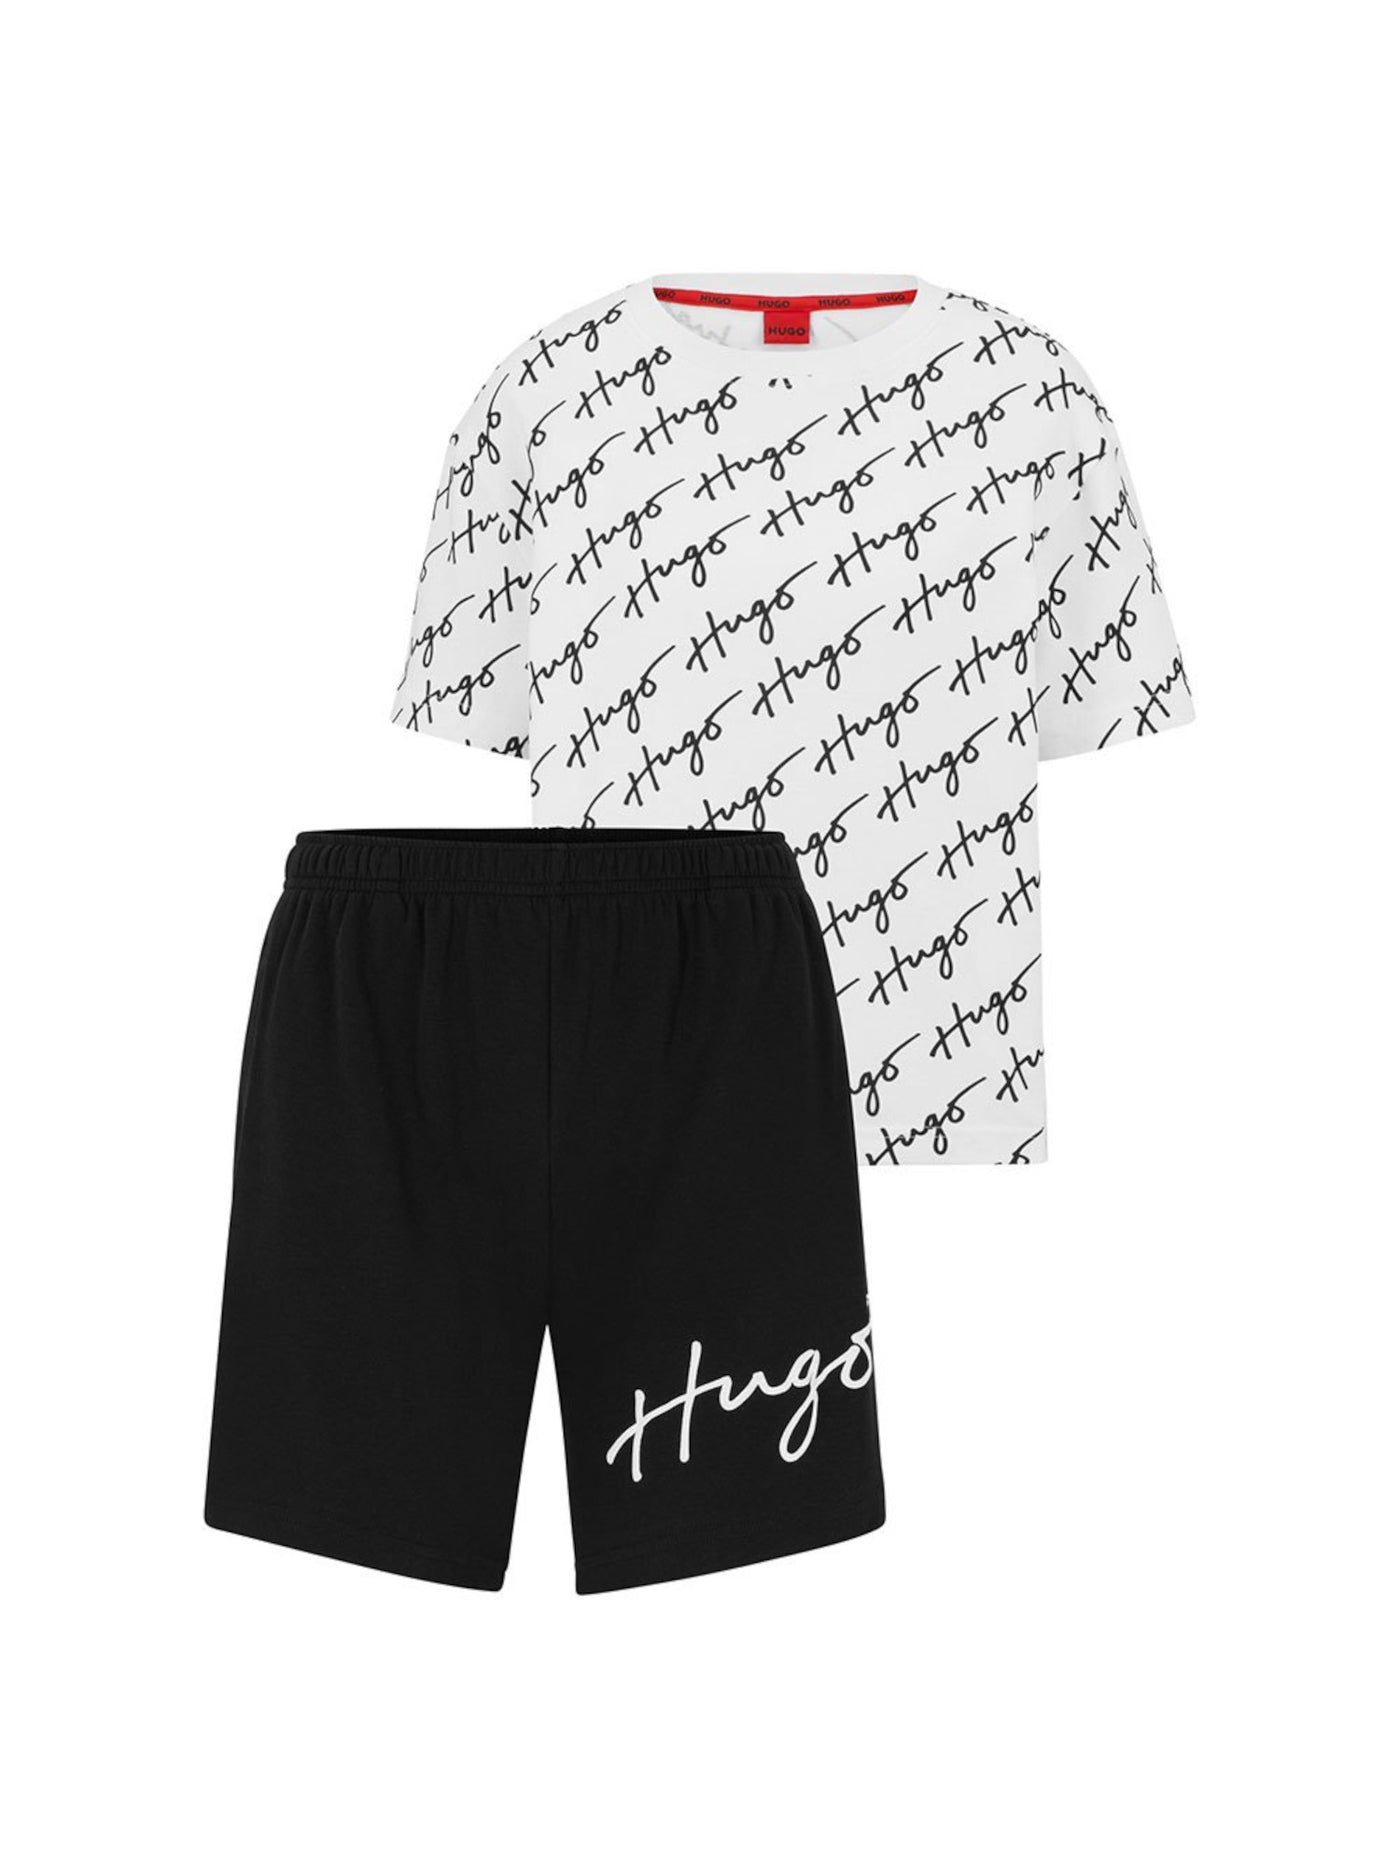 HUGO Mens Red Label White Short Sleeve T-Shirt Top Shorts Pants Pajamas L